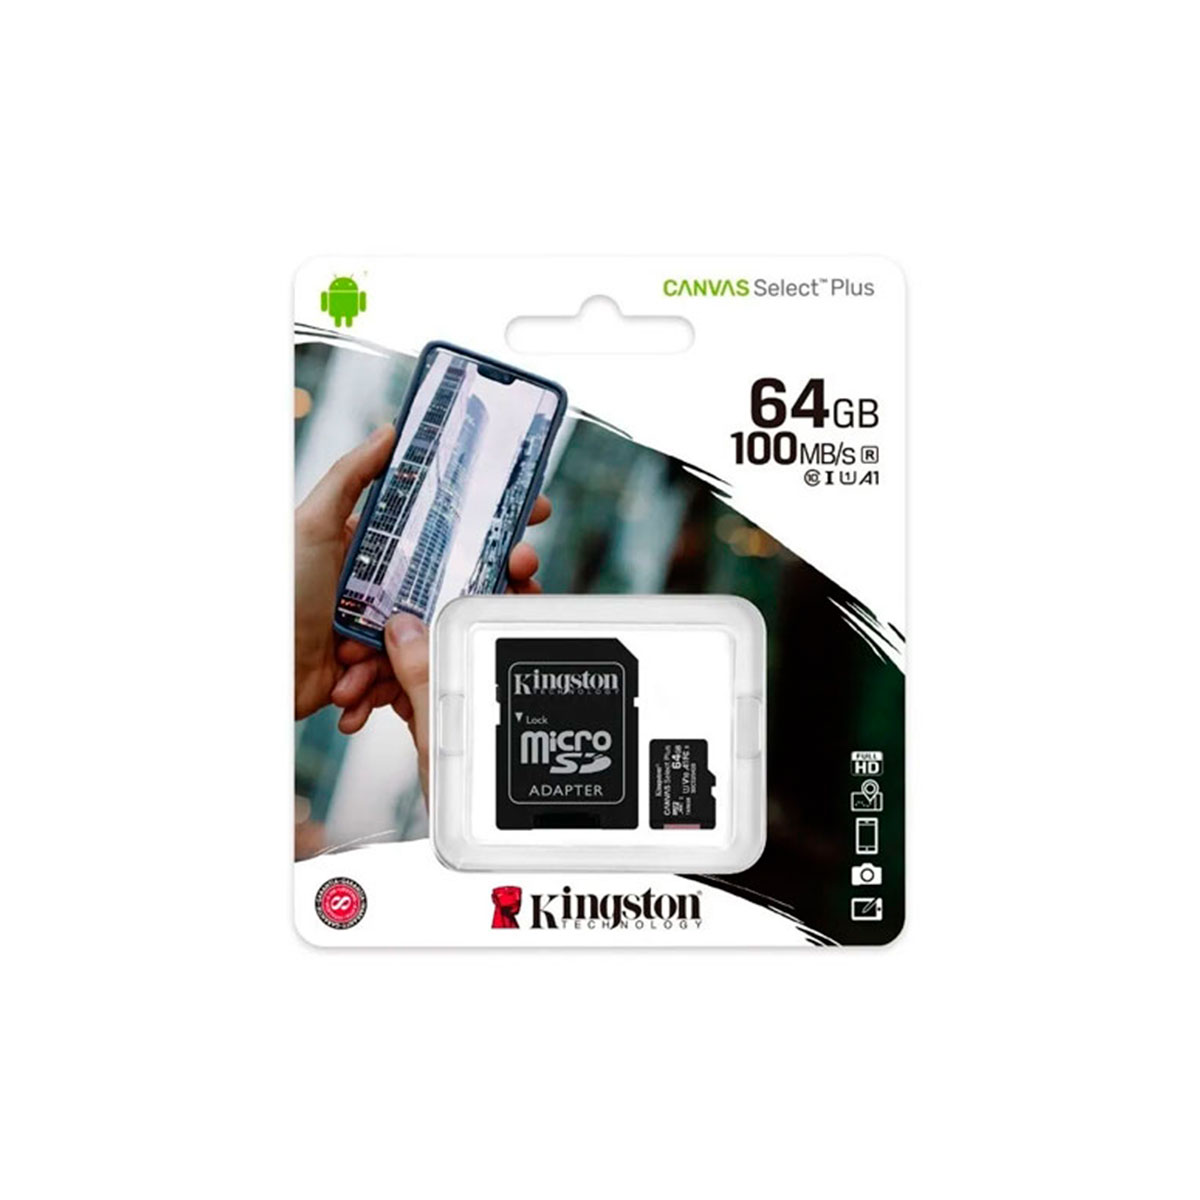 SDCS2-64GB KINGSTON                                                     | DIGITAL CARD 64 GB C/ADAP CLASE 10 UHS-I (U1) 100MB/S CANVAS PLUS (8697)                                                                                                                                                                        